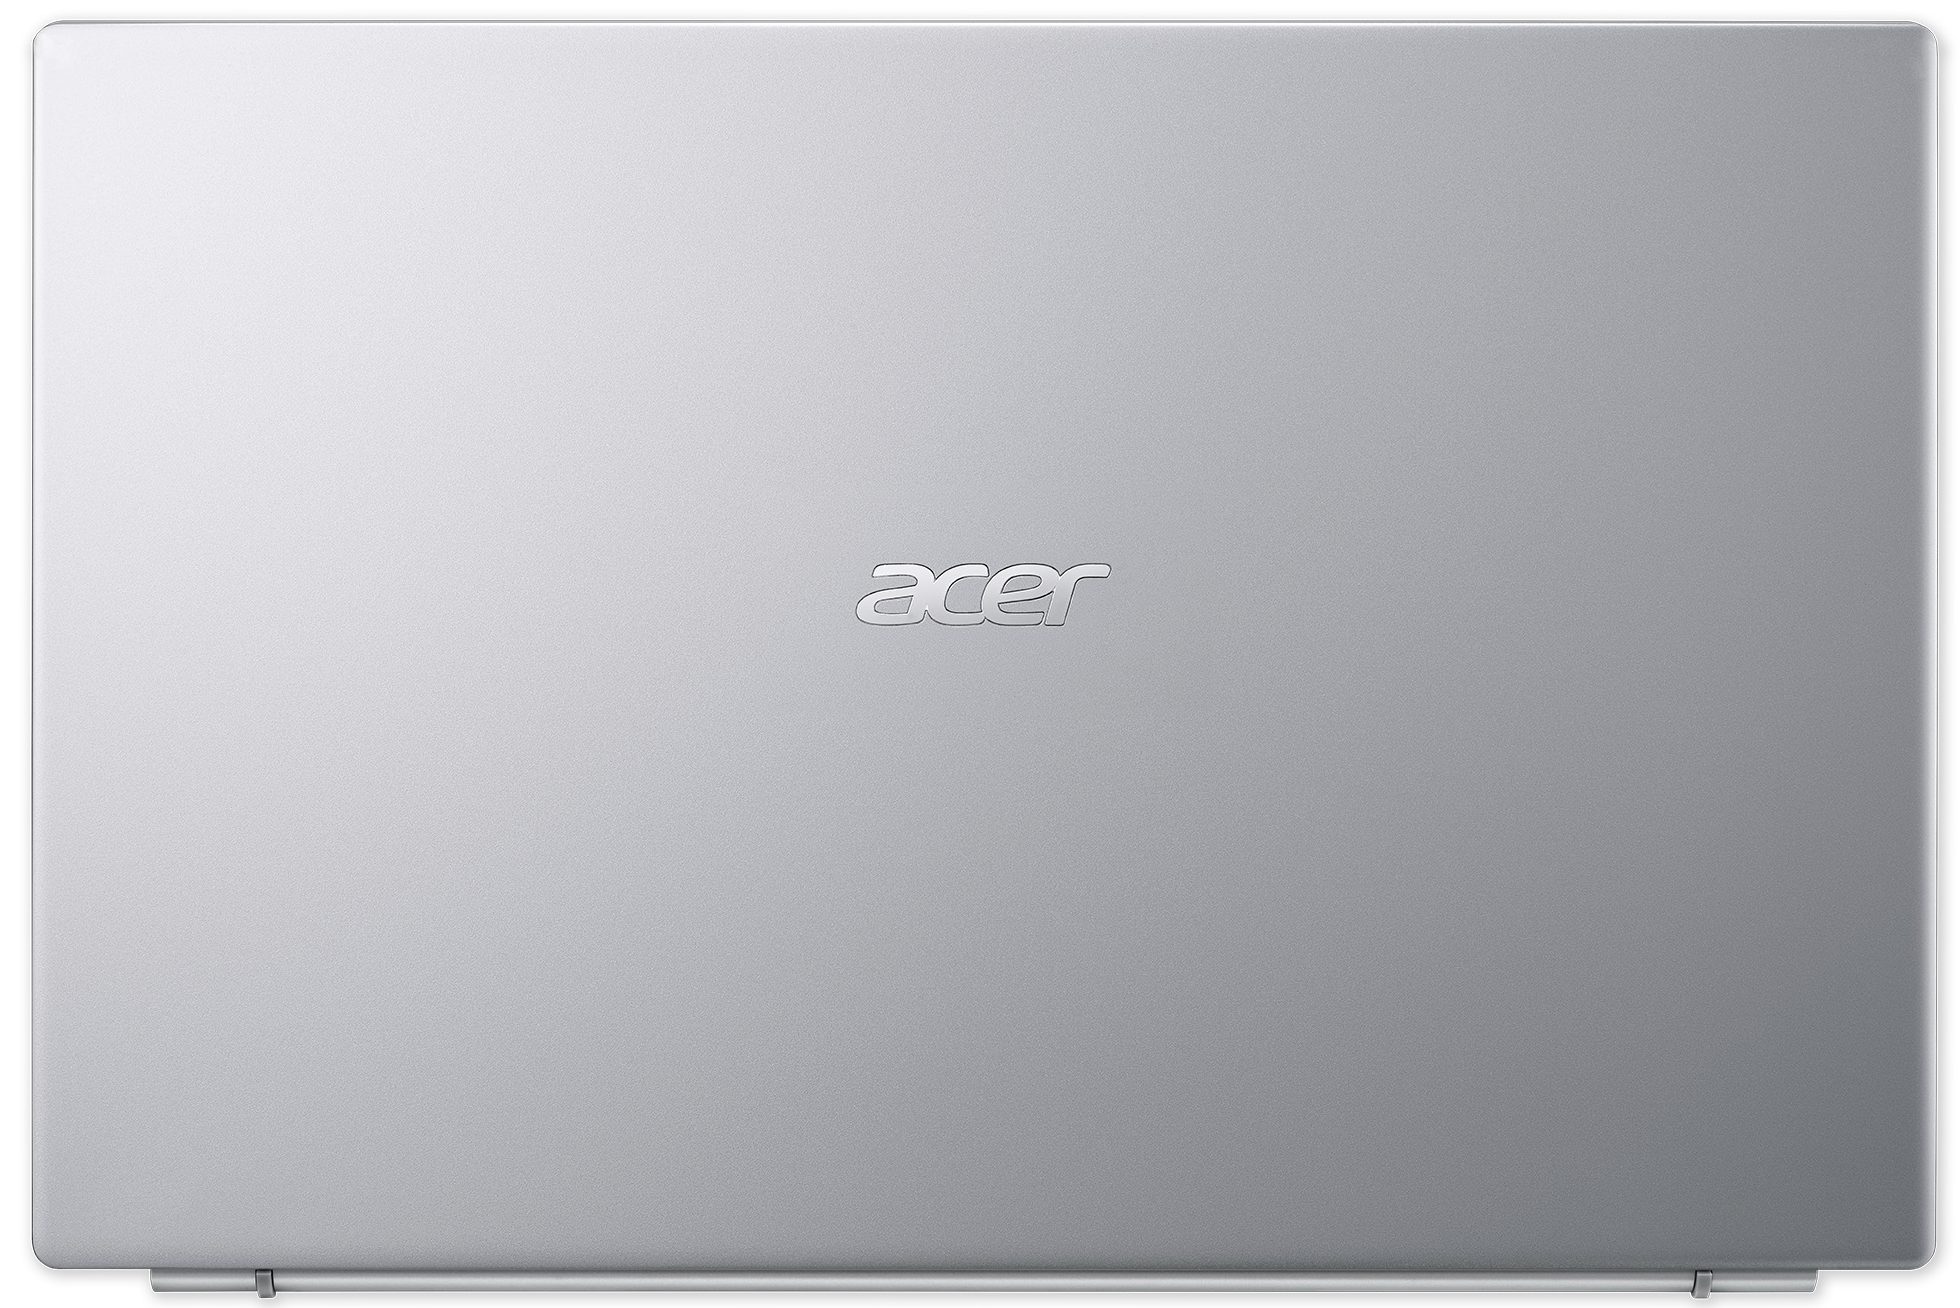 Acer Aspire 3 - 15.6 Laptop Intel Core i3-1115G4 3GHz 4GB RAM